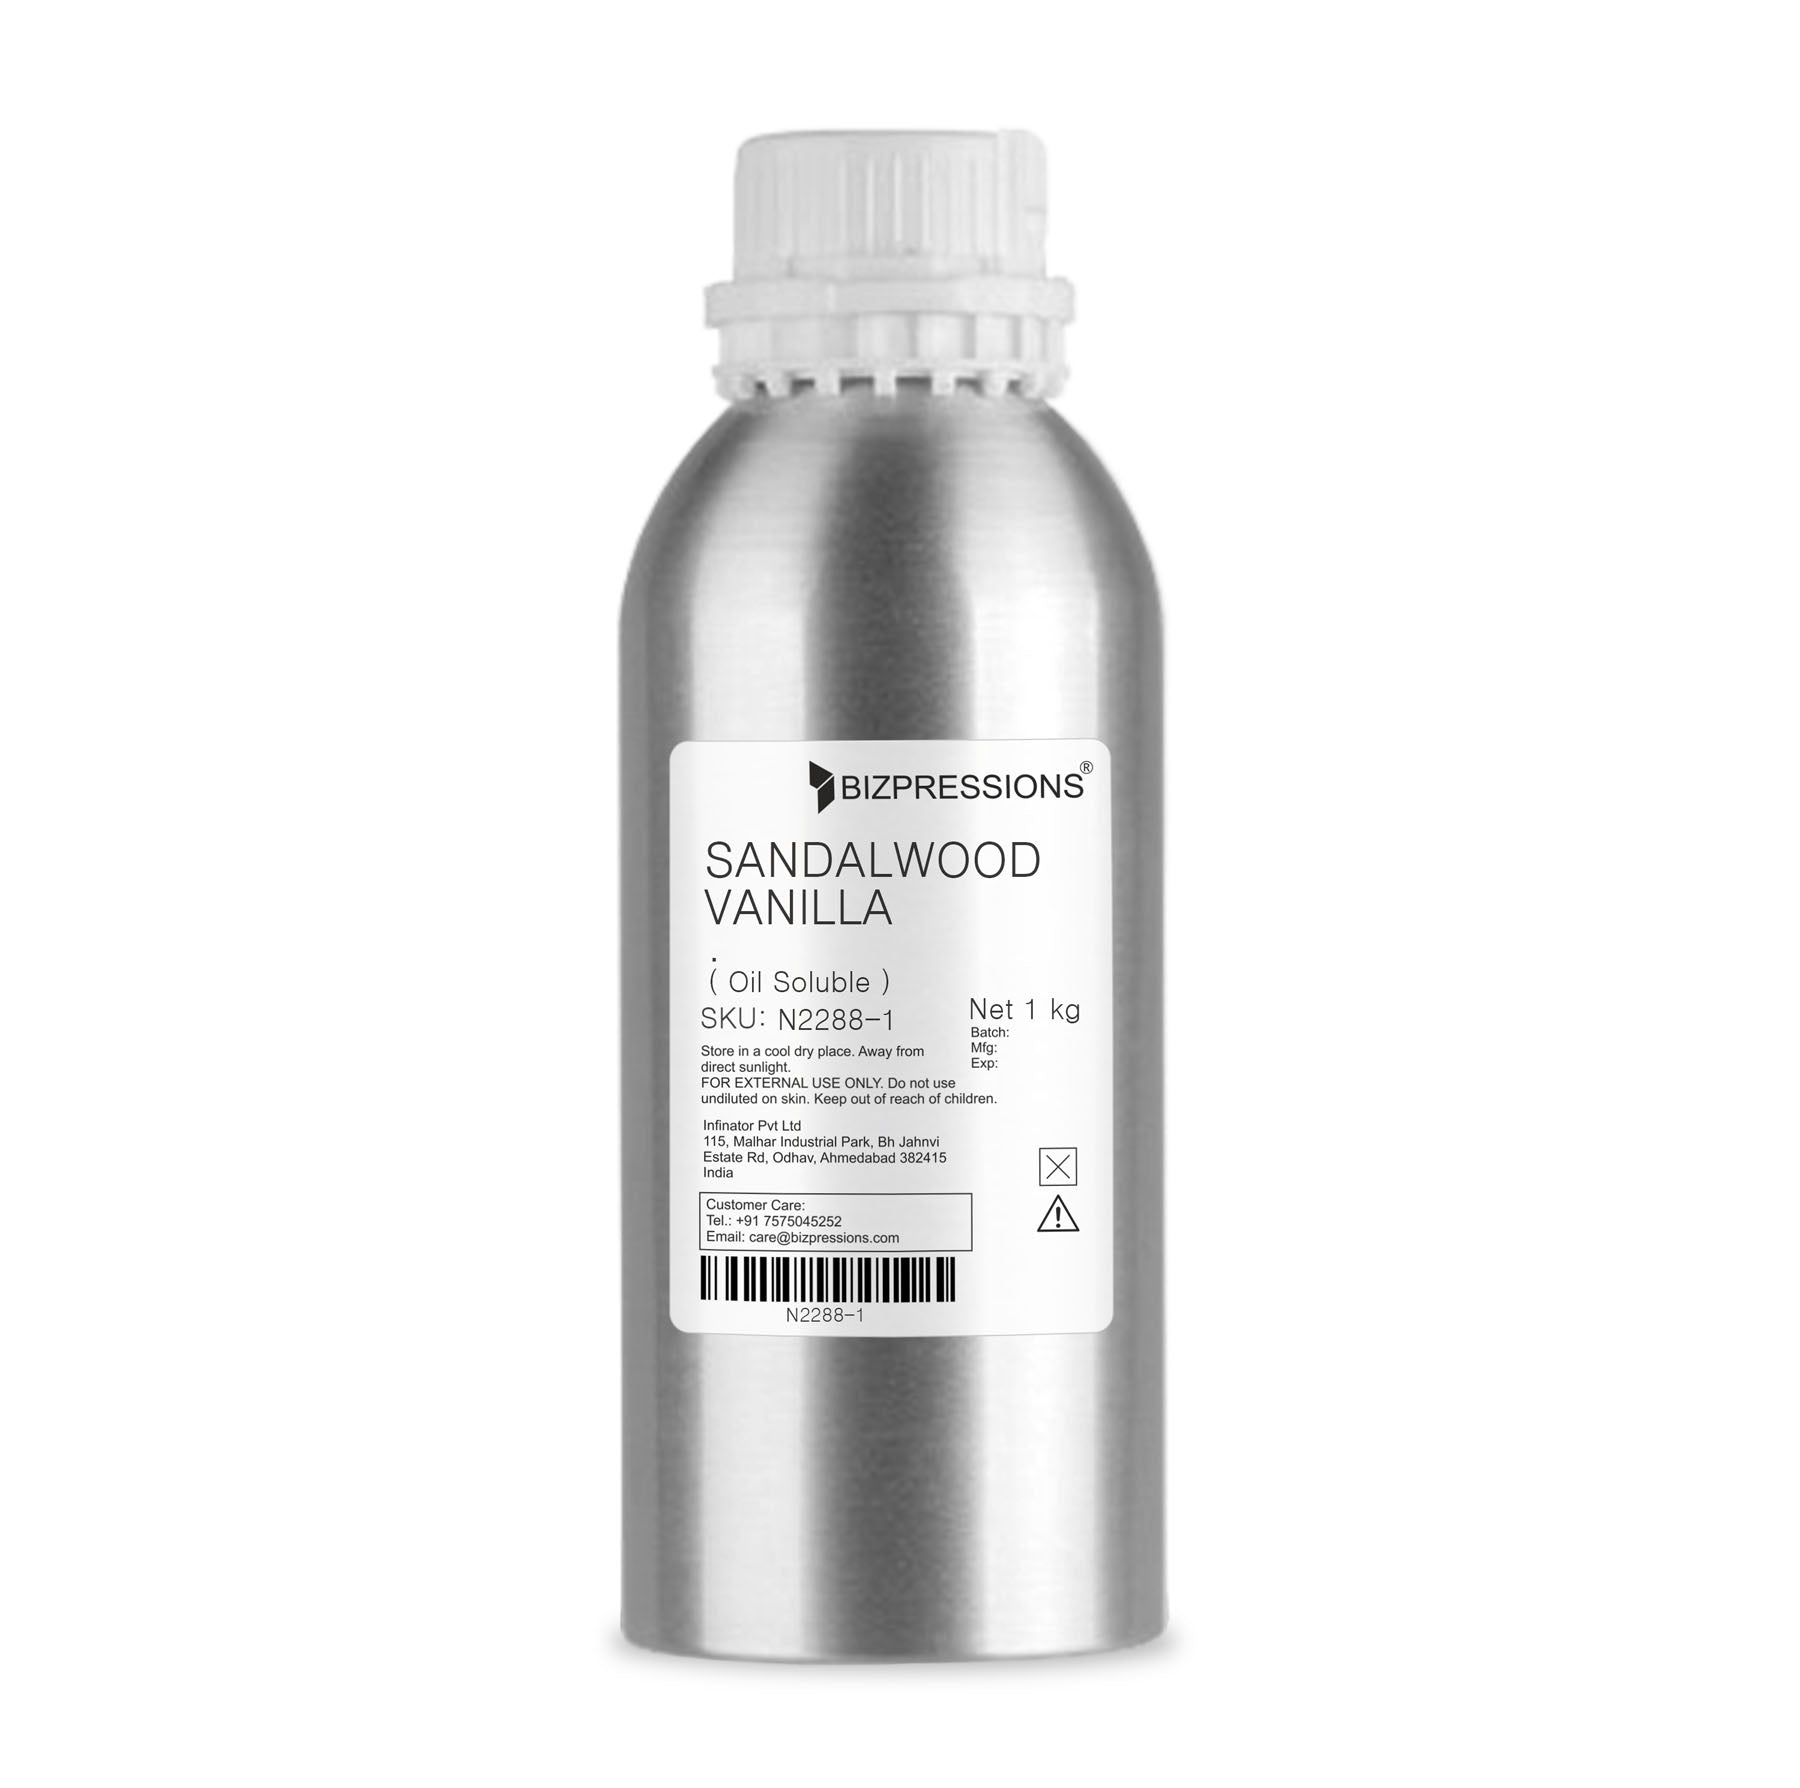 SANDALWOOD VANILLA - Fragrance ( Oil Soluble ) - 1 kg